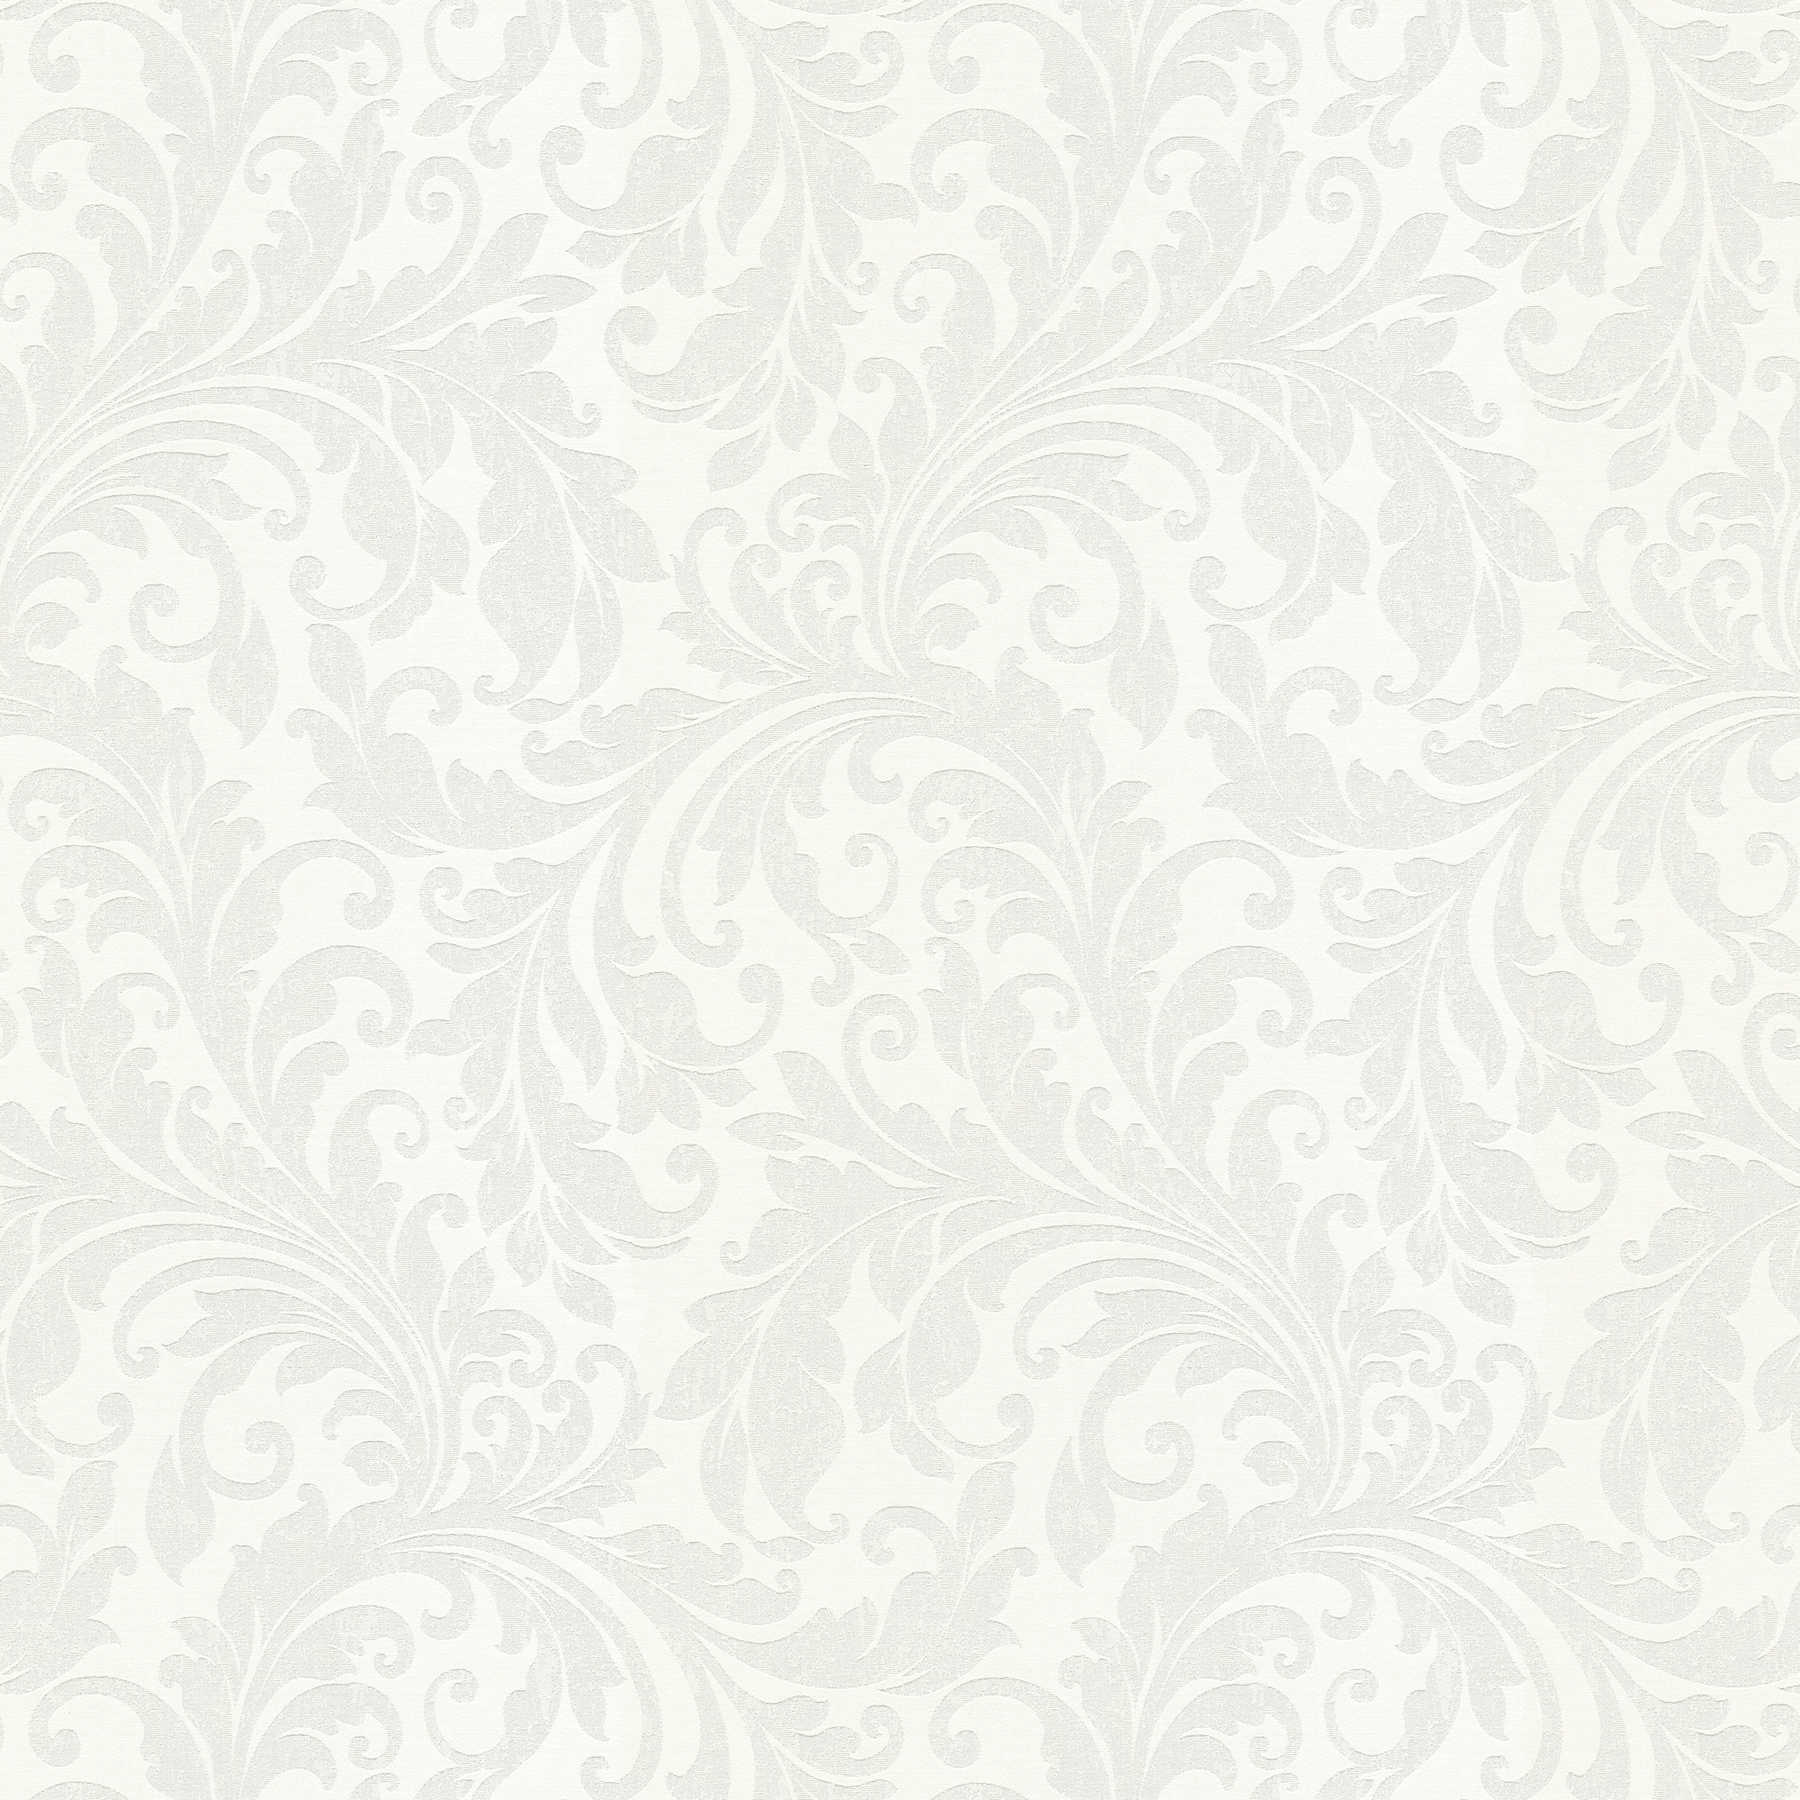 Carta da parati con motivi floreali tono su tono - grigio, bianco
